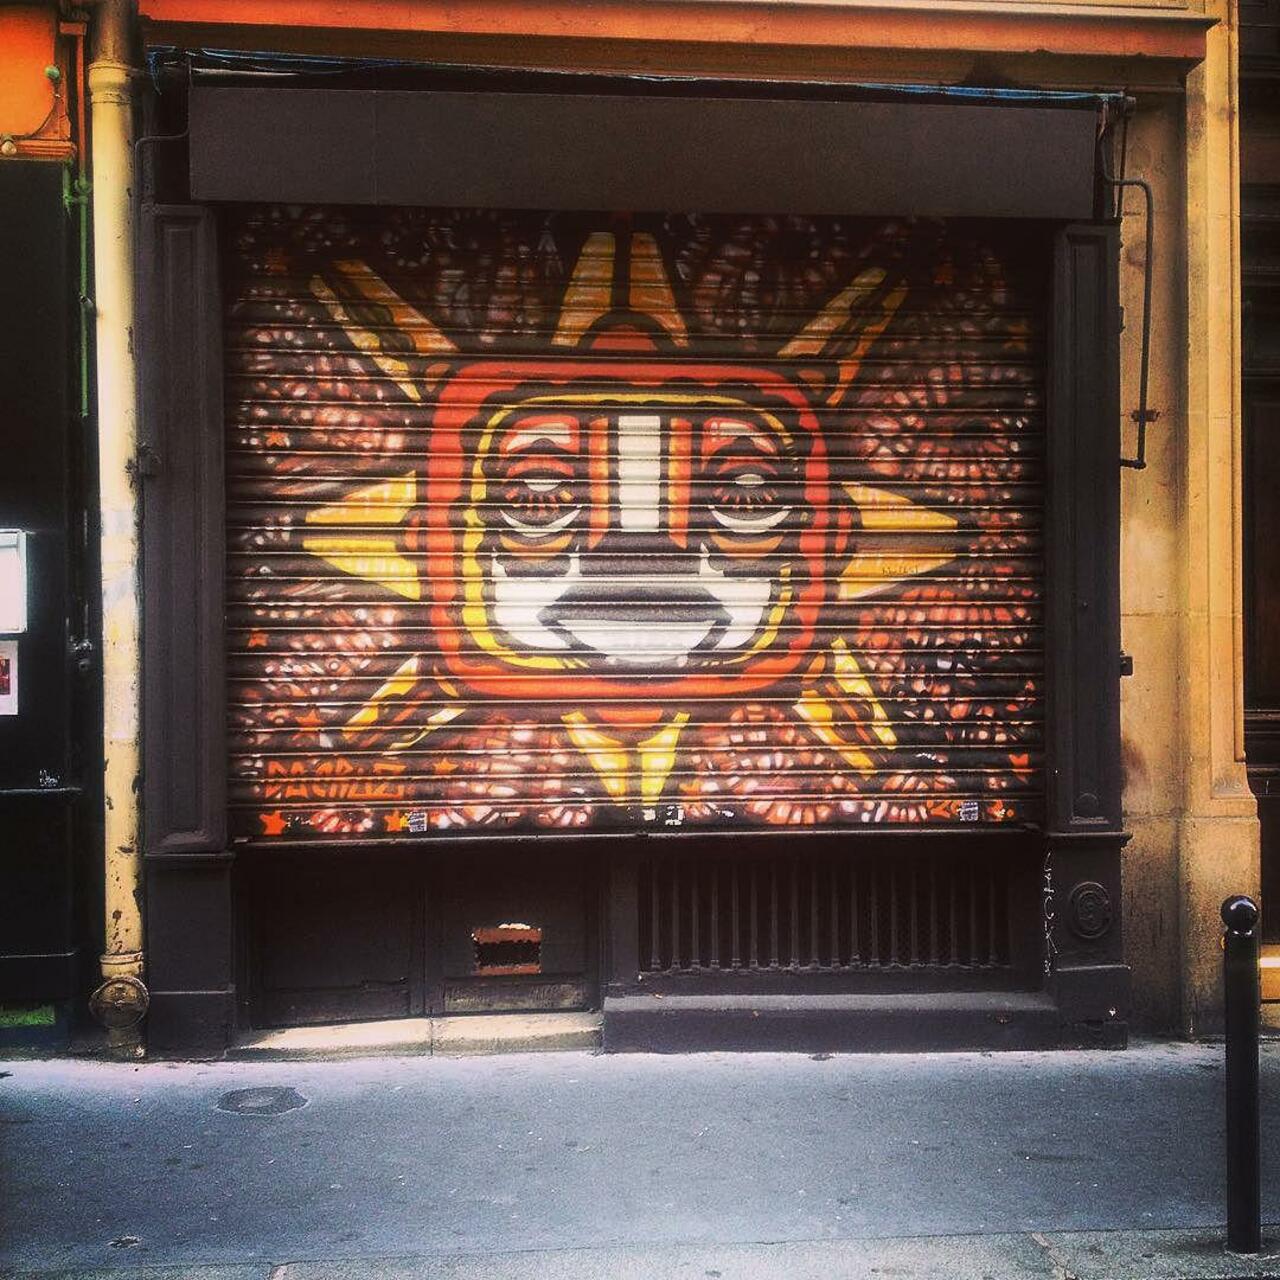 #Paris #graffiti photo by @mh2p_ http://ift.tt/1jrO8Vl #StreetArt http://t.co/UpE01R98pw